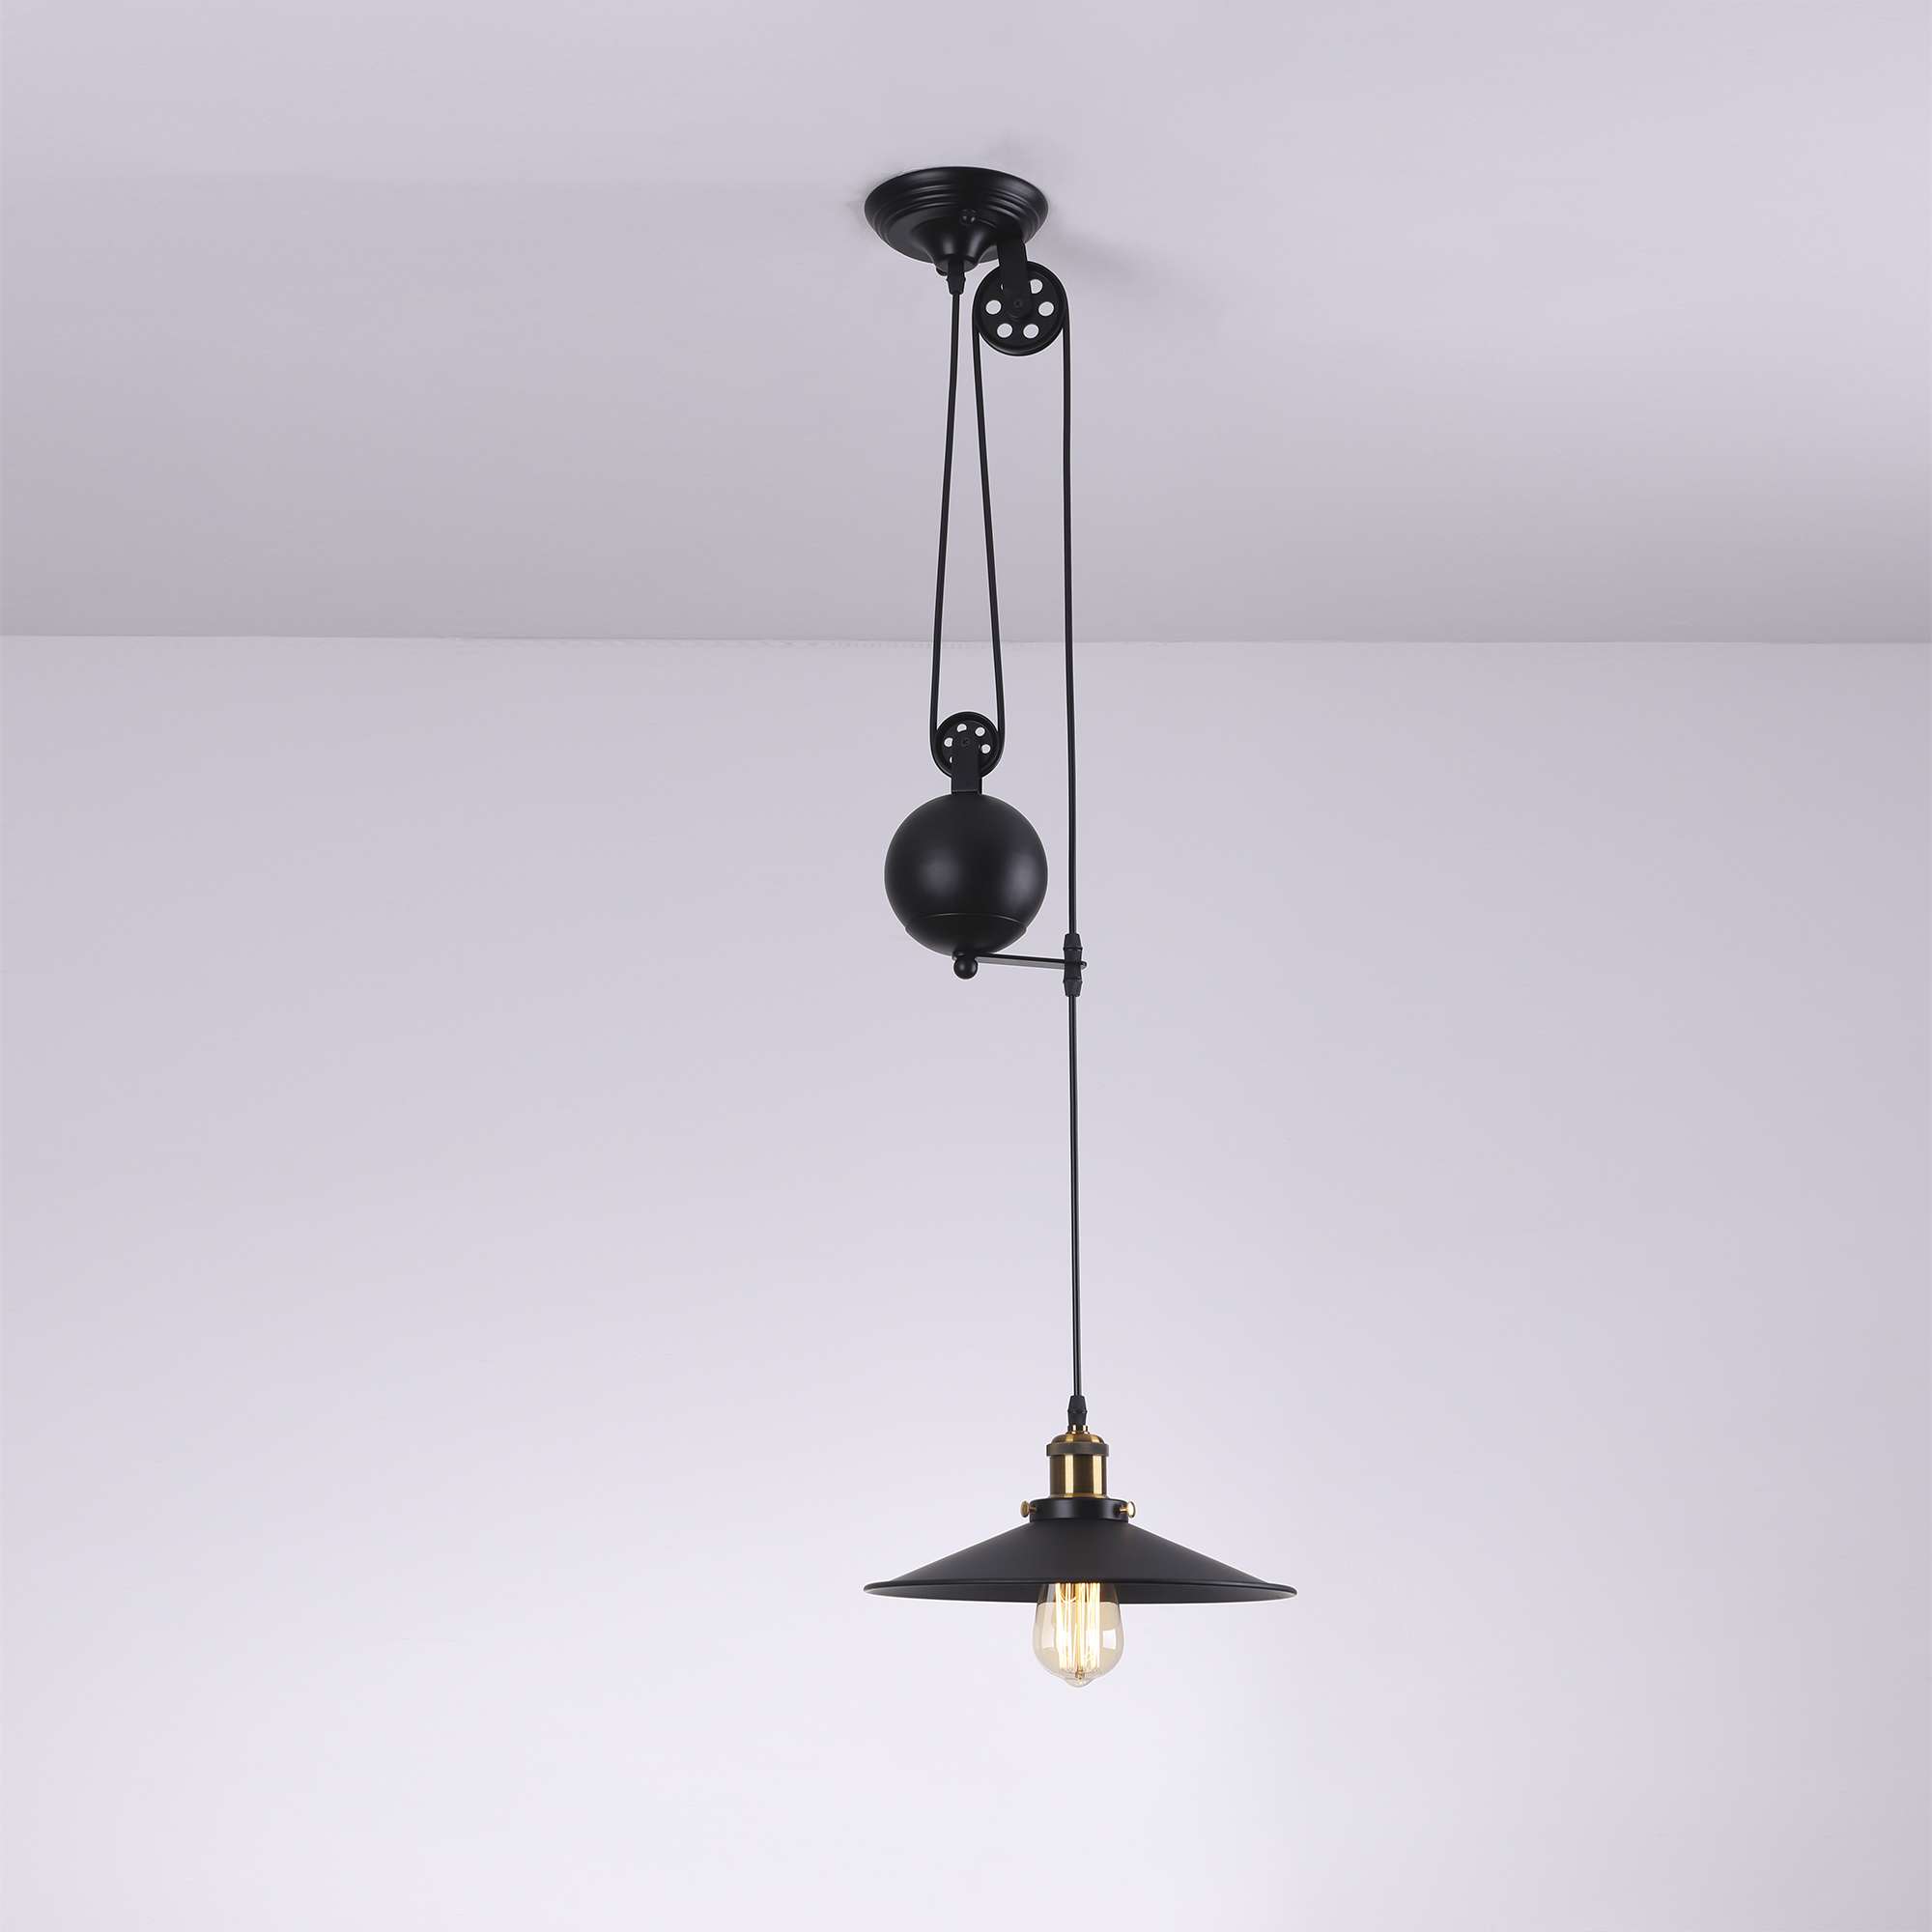 Pendant Pulley Light Industrial Vintage Ceiling Single Bulb Lights